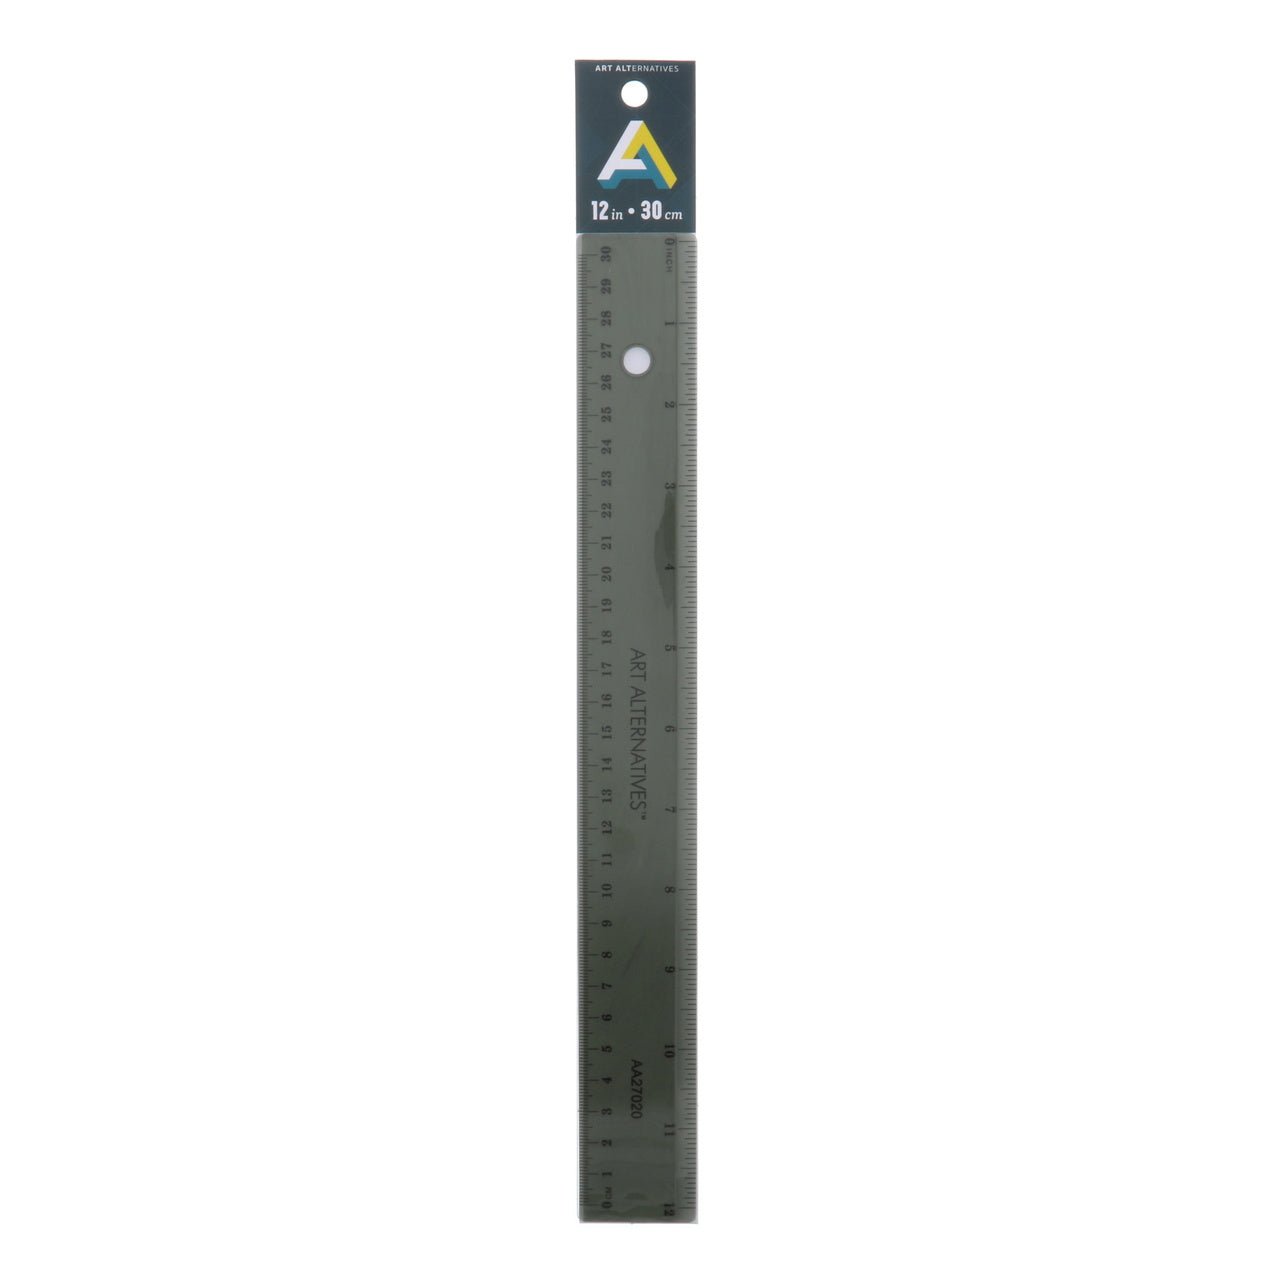 Art Alternatives Shatter Resistant Ruler (Inches & Centimeters) 12 inch